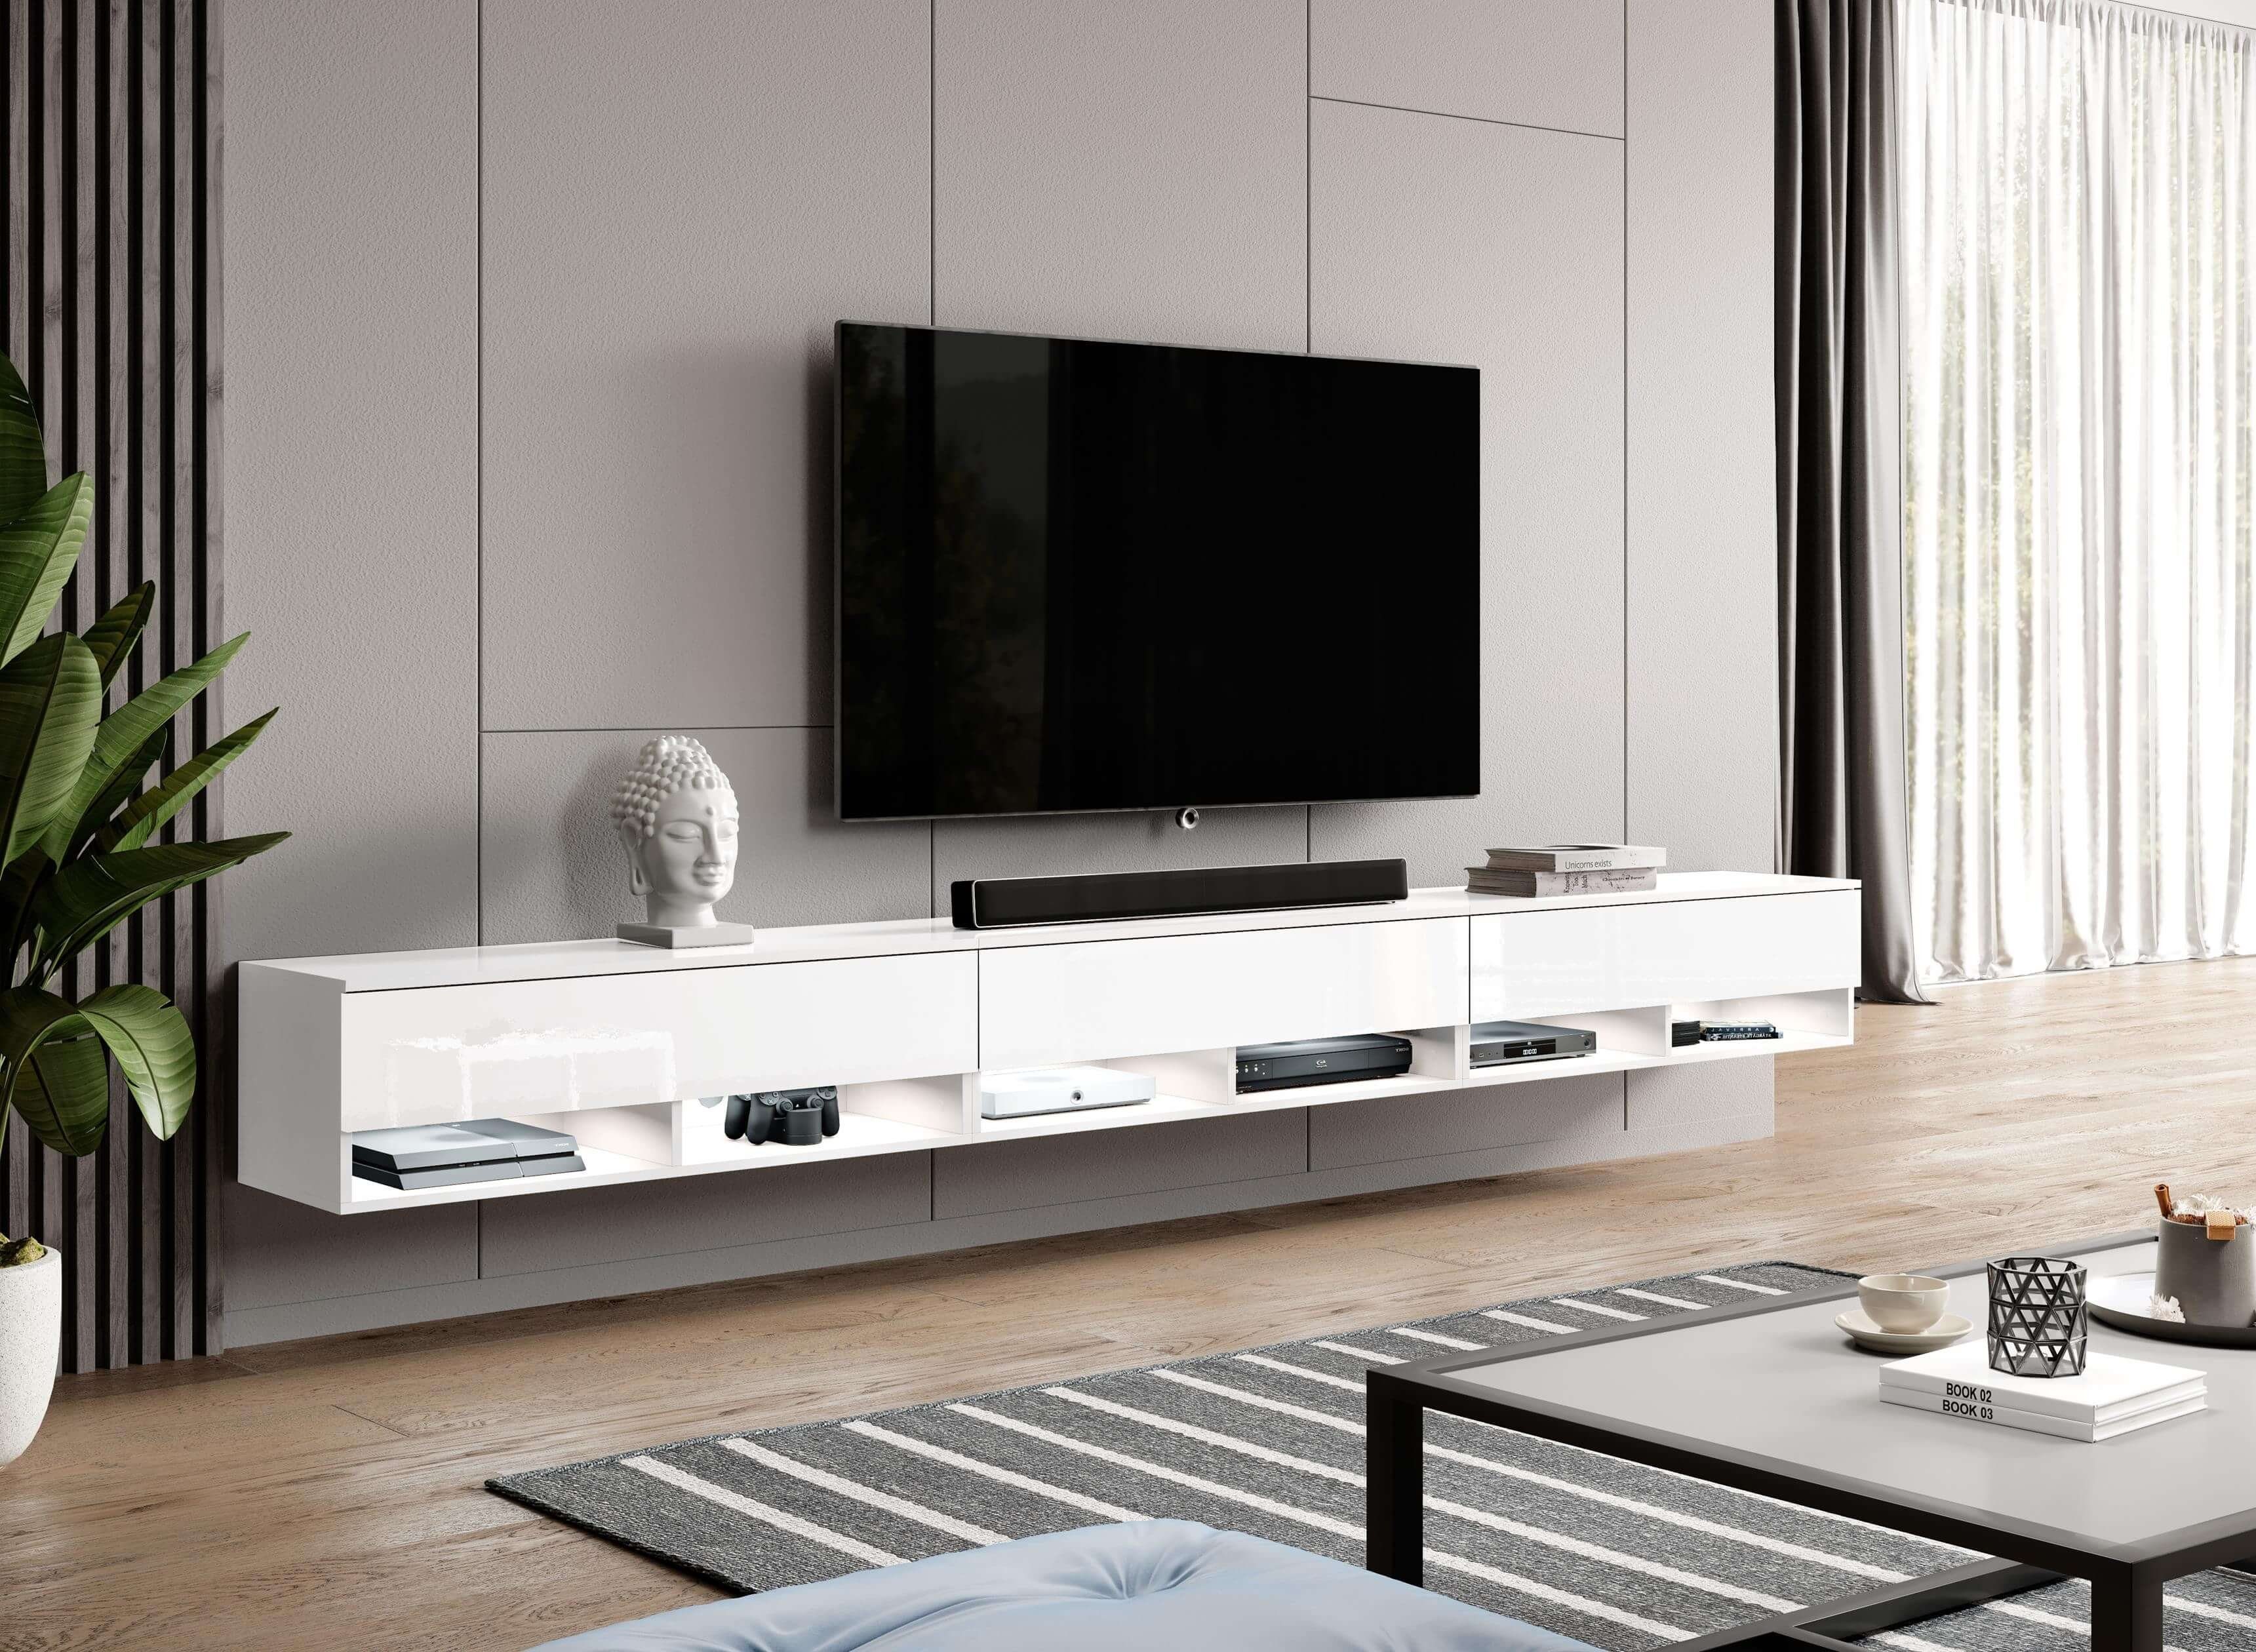 T32 TV-Schrank mit Furnix TV-Kommode Weiß/Weiß 3 H34 Türen cm x Lowboard cm 300 ohne Glanz LED x B300 ALYX